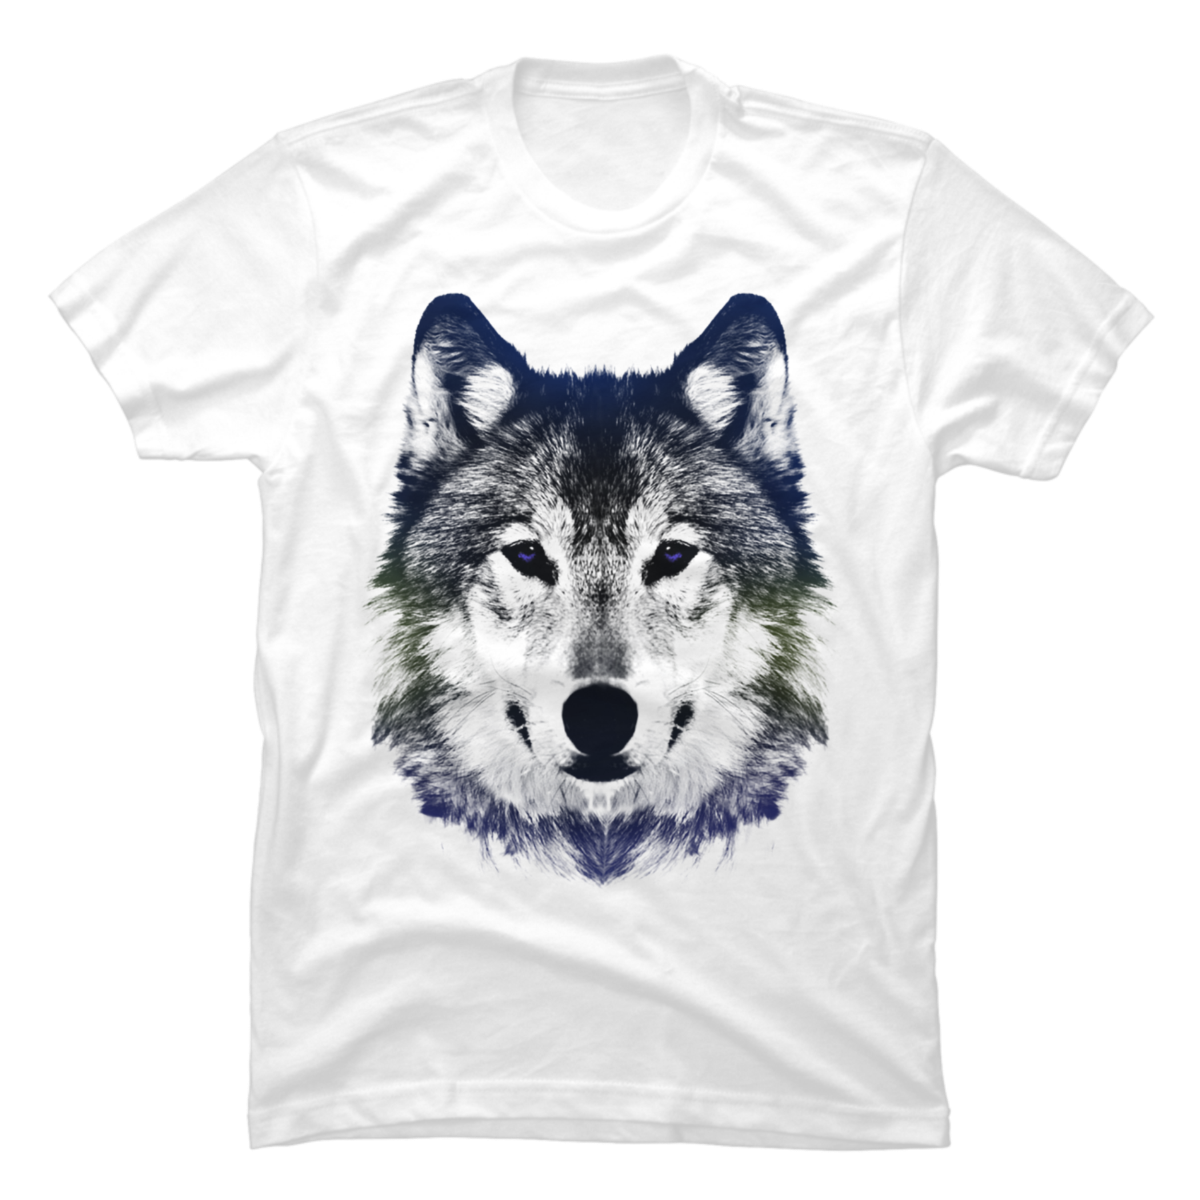 WOLF 1,WOLF 1present,WOLF 1 tshirt - Buy t-shirt designs